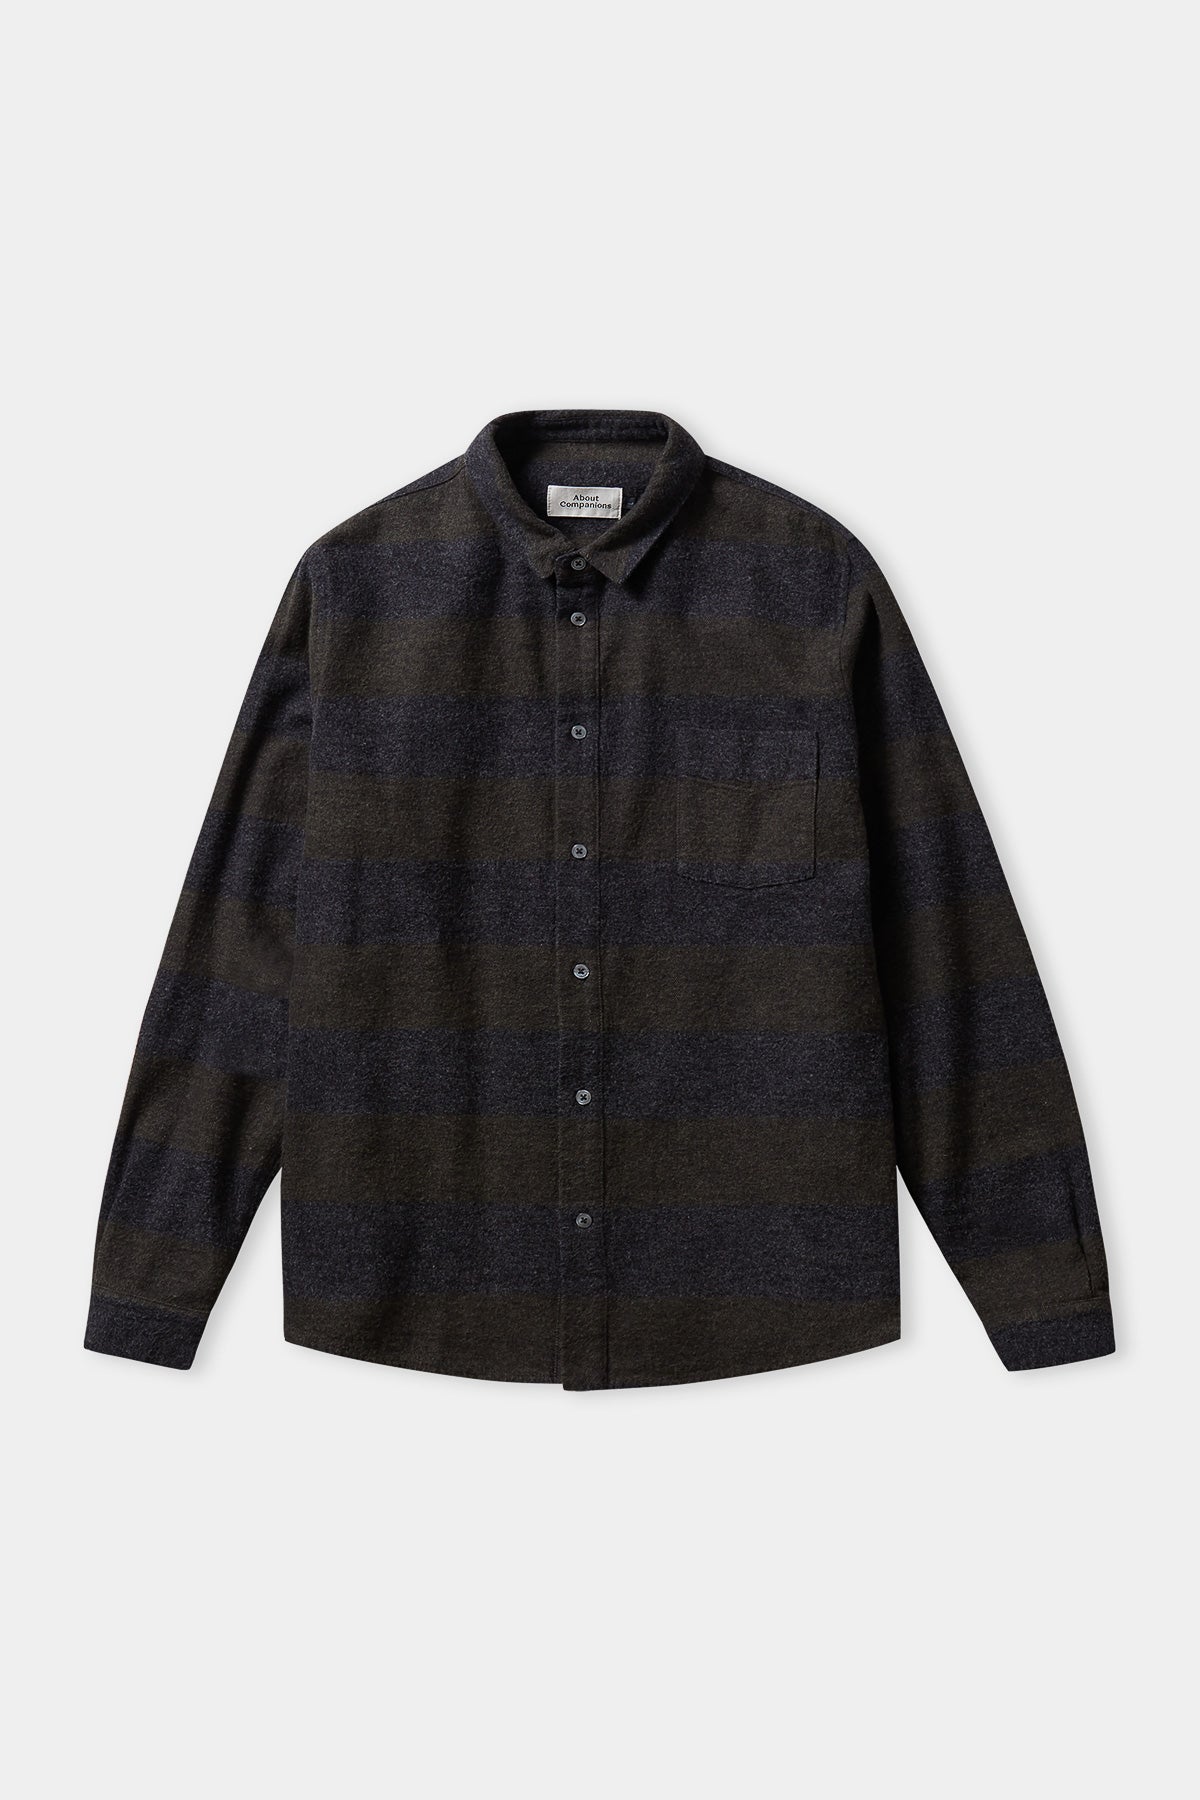 SIMON shirt eco striped coal flannel